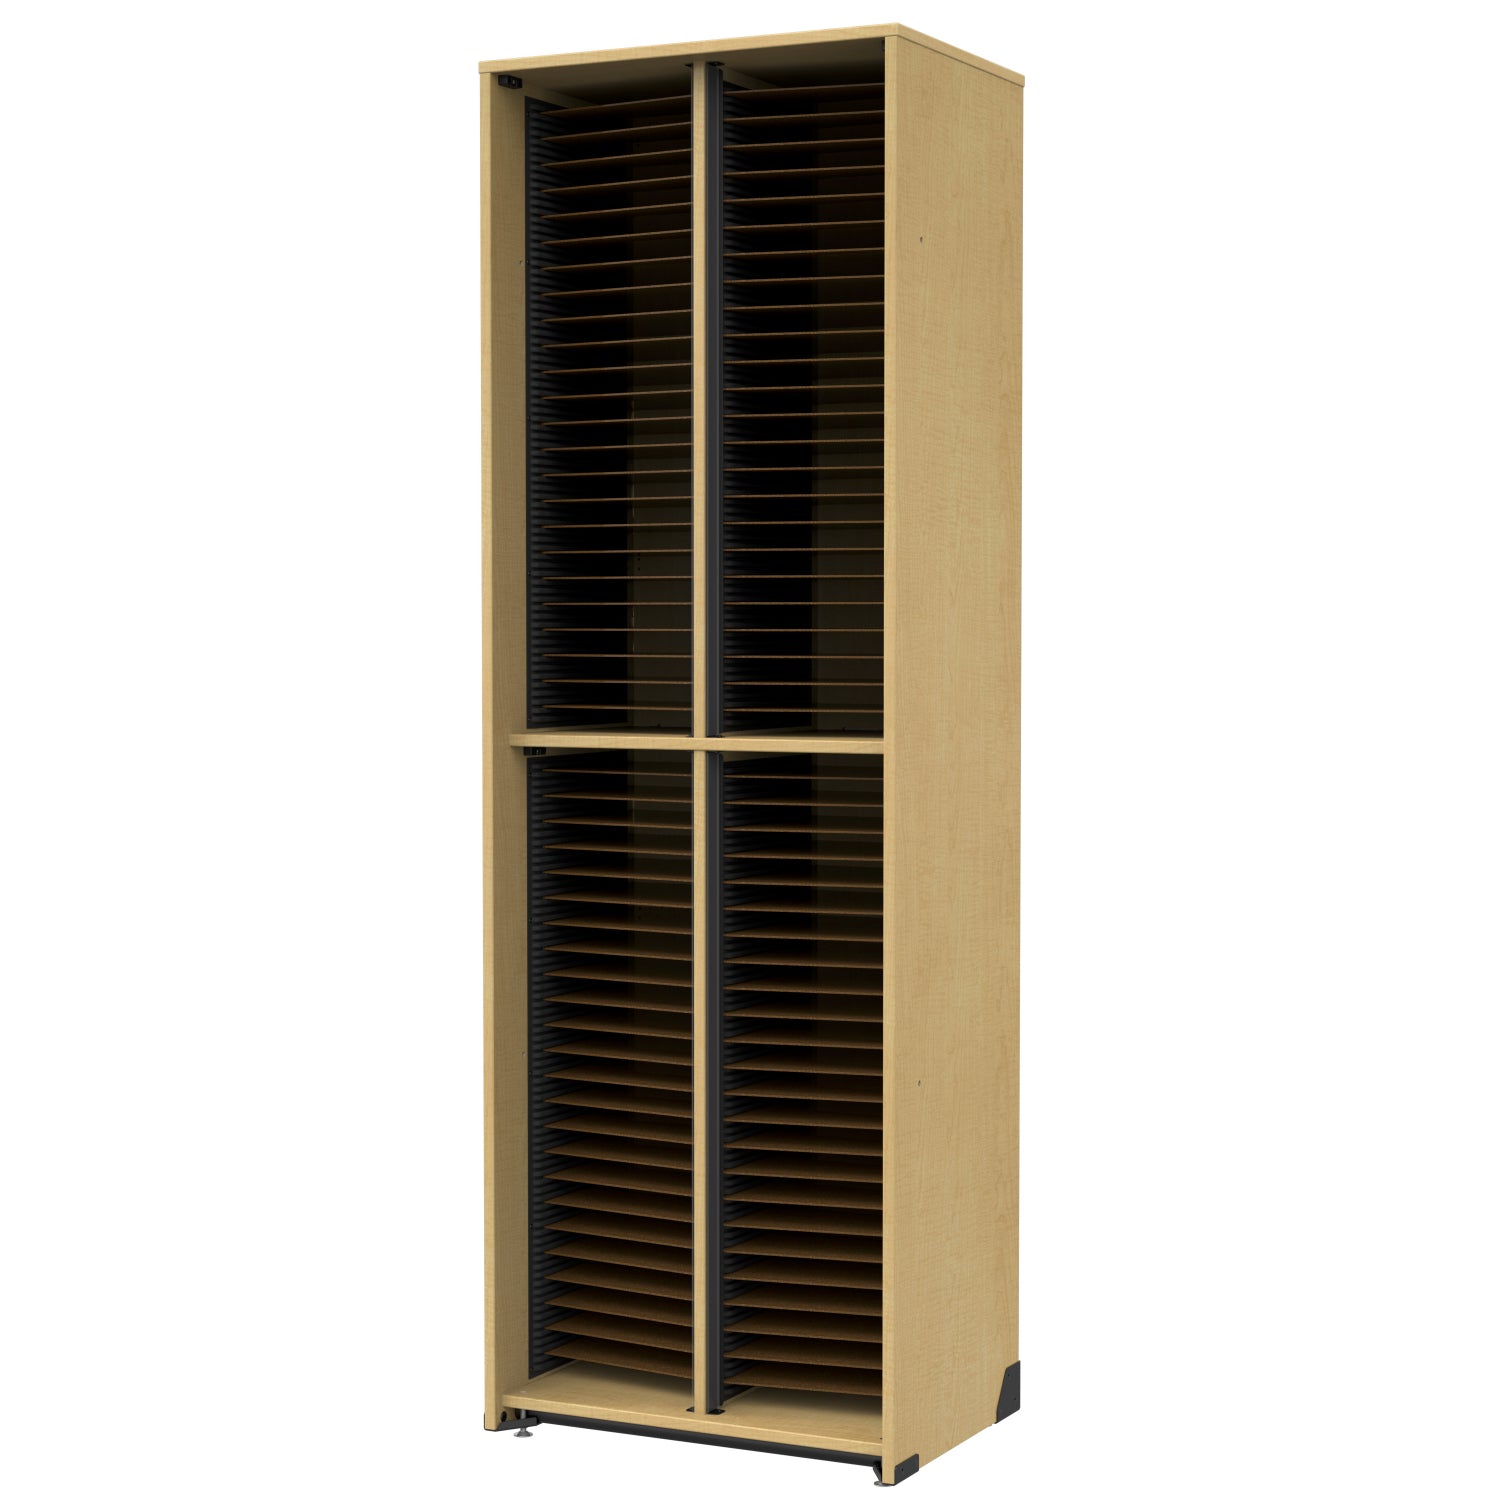 Bandstor™ Tall Choral Folio Cabinet, 100 Shelves, No Door